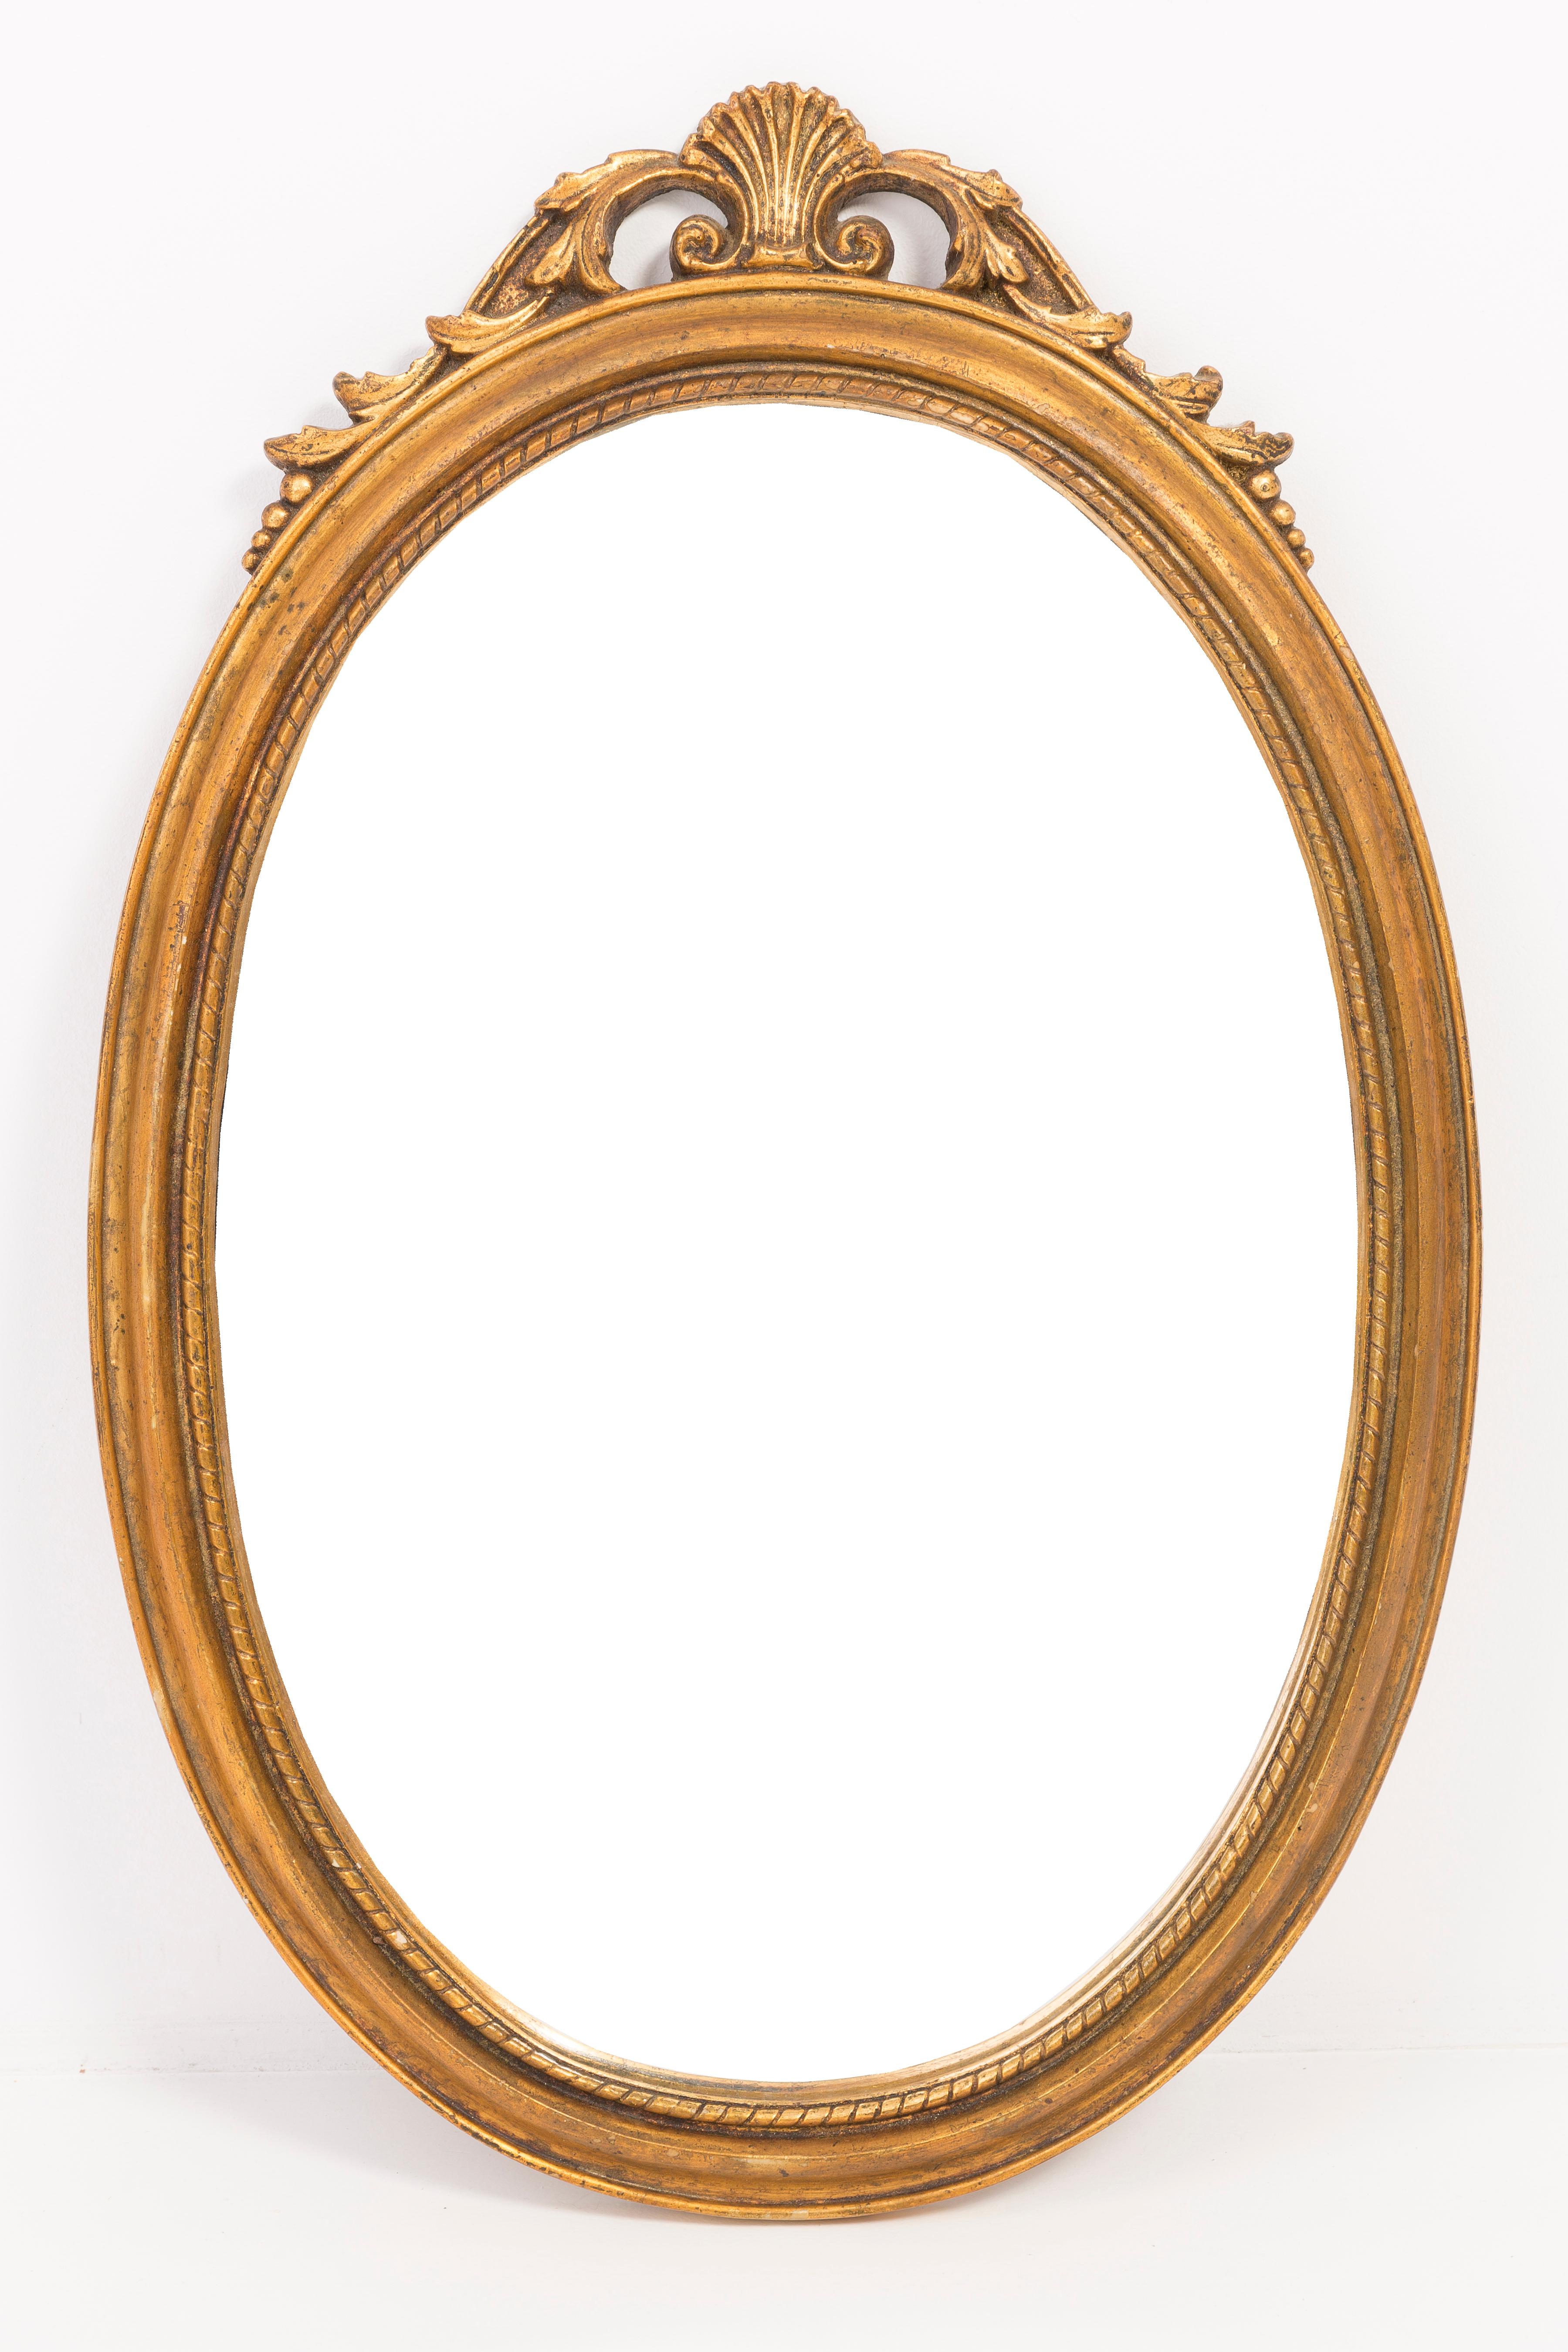 Vintage Wall Oval Mirror wood ornate Frame Gold Gilt Bronze Baroque solid frame Belgium Mirror